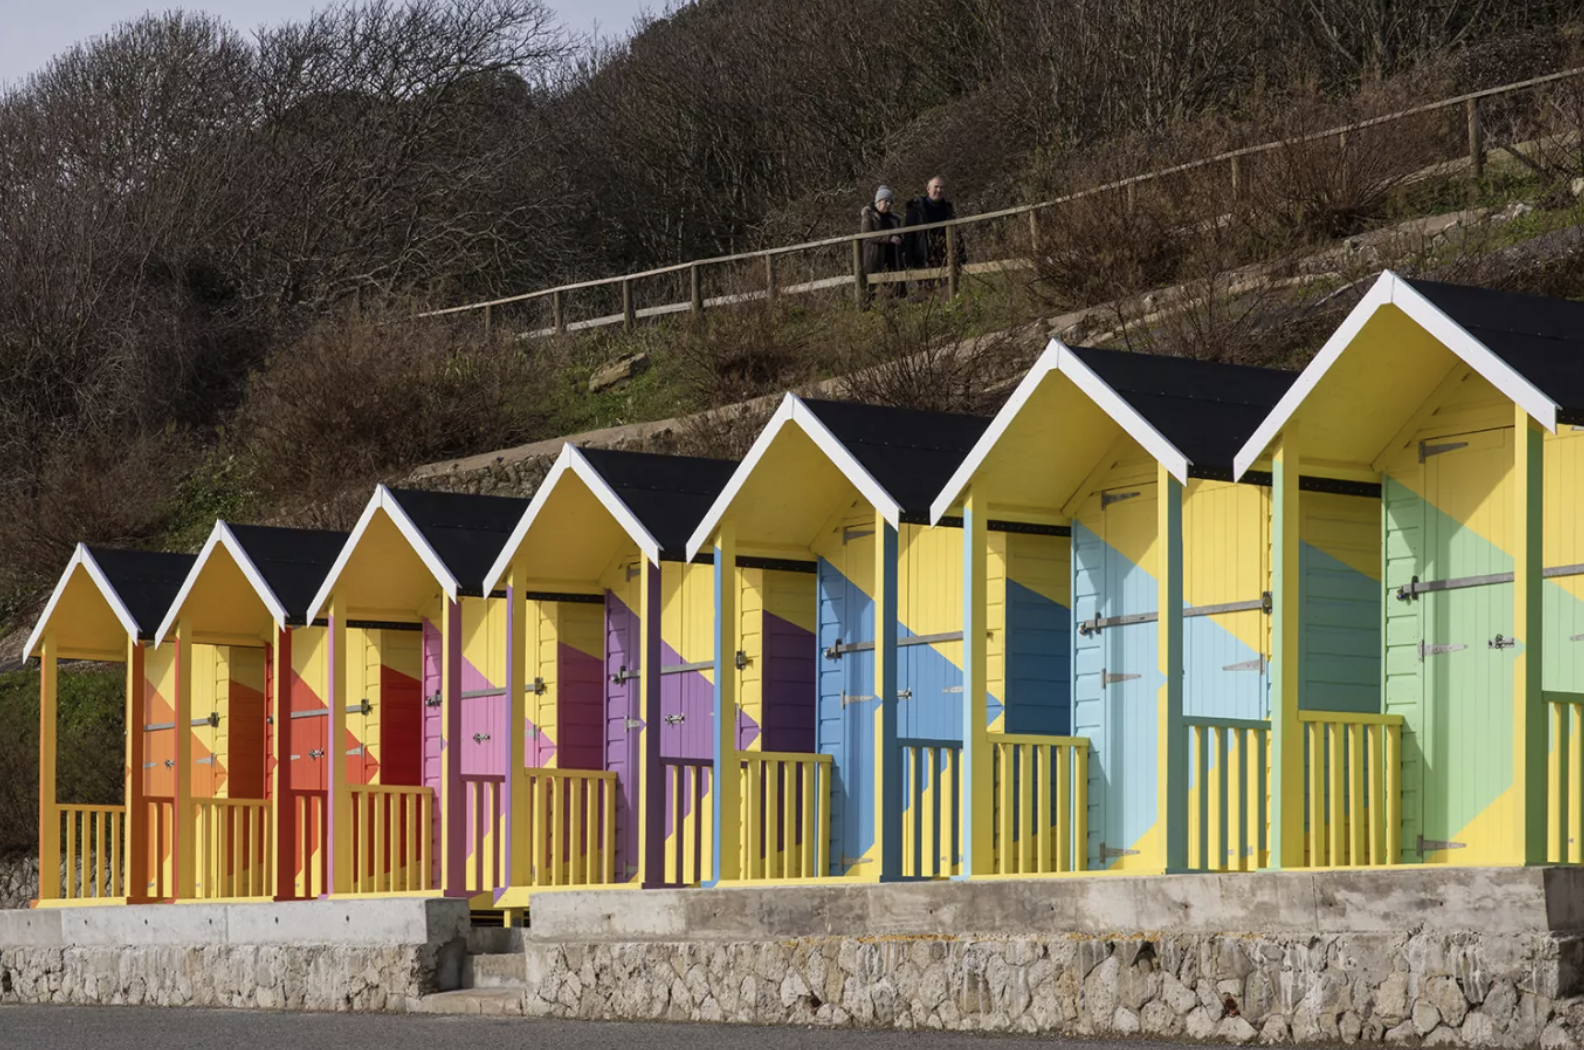 Folkestone - huts by the beach